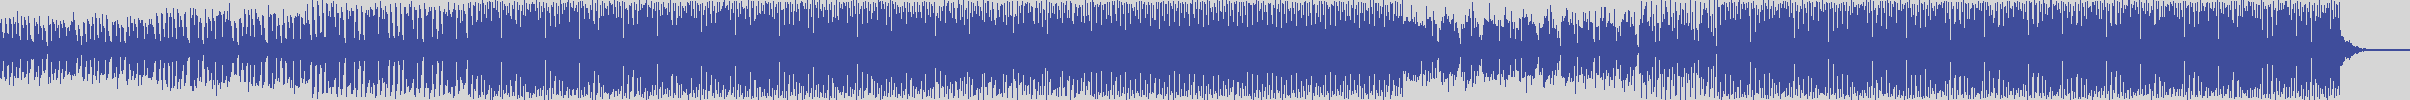 nf_boyz_records [NFY030] Rich Fox - Bounty [Bassline Mix] audio wave form